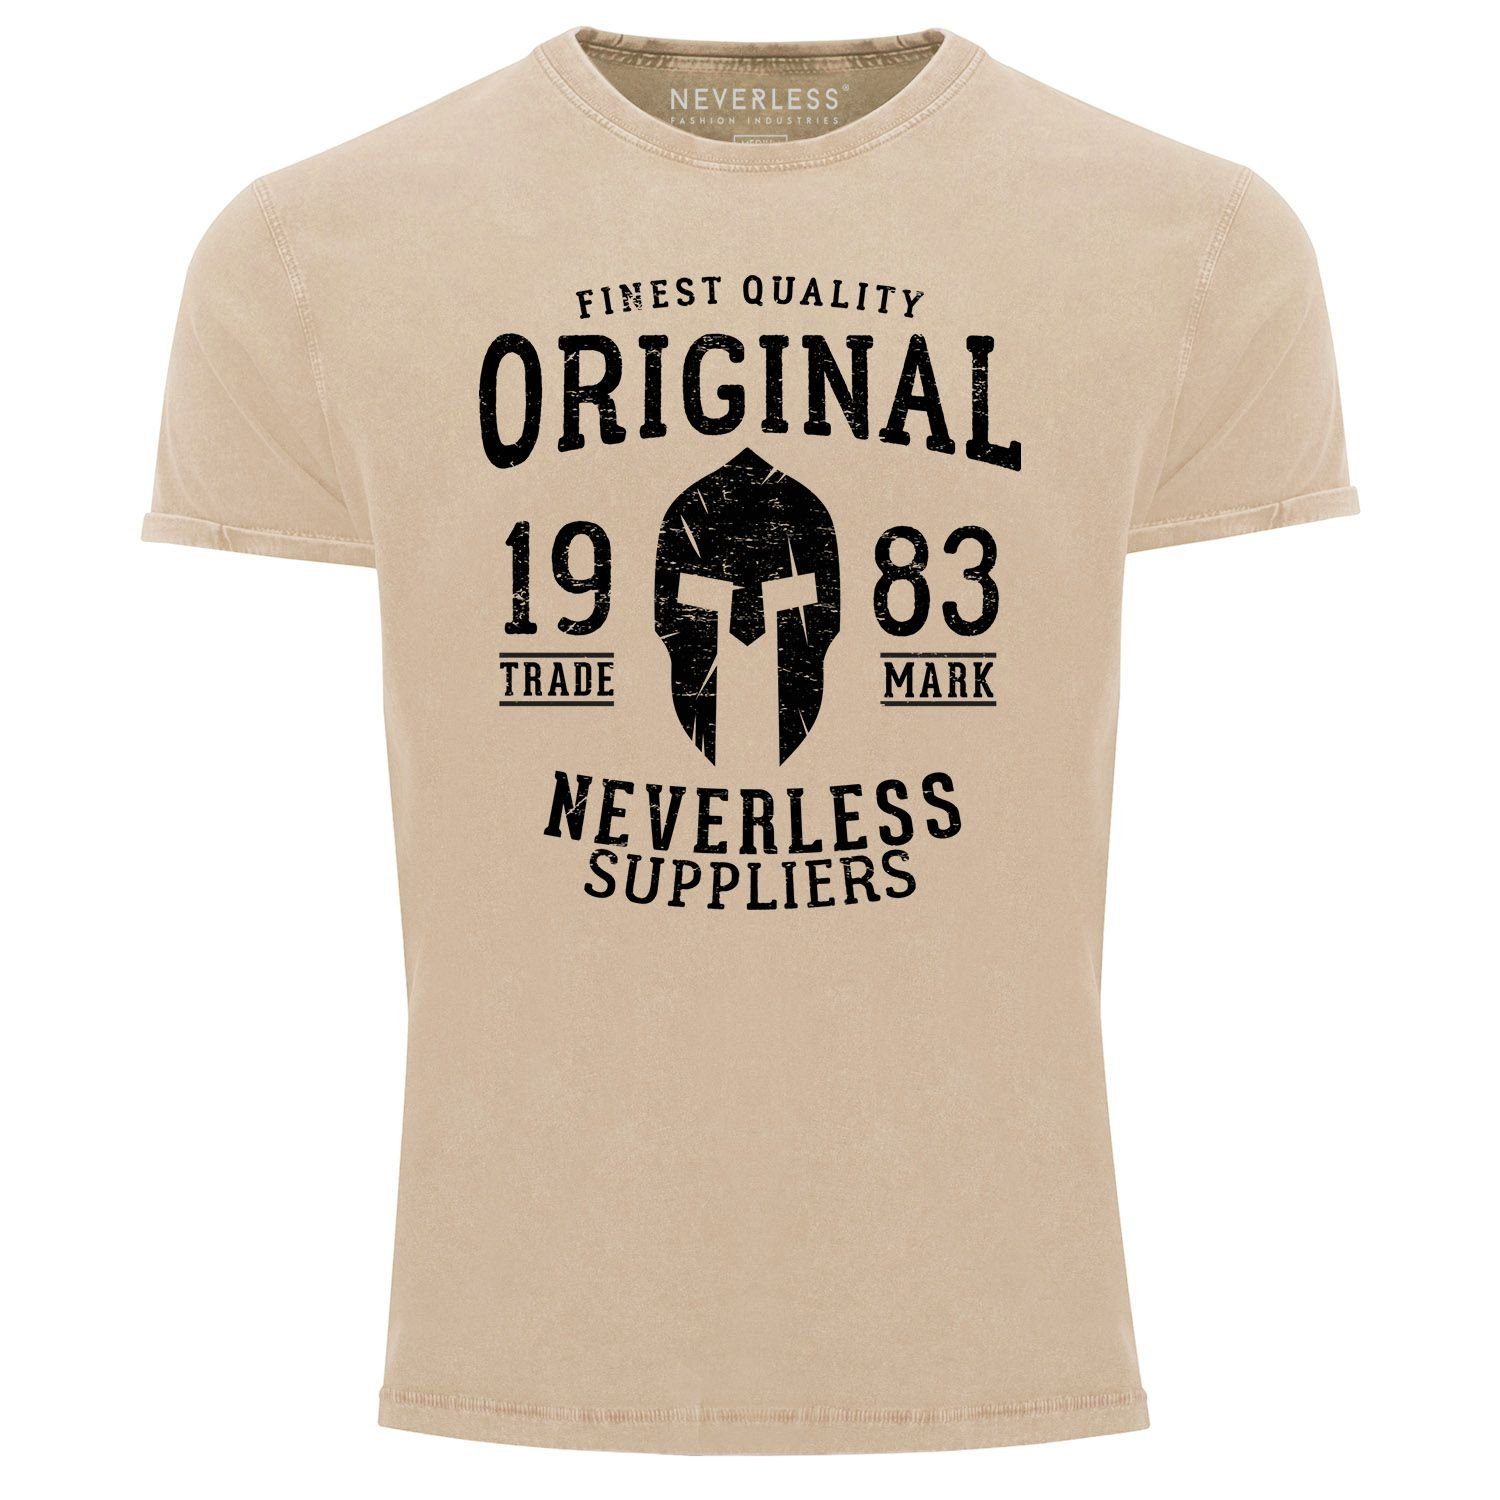 Neverless Print-Shirt Cooles Angesagtes Herren T-Shirt Vintage Shirt Original Gladiator Aufdruck Used Look Slim Fit Neverless® mit Print natur